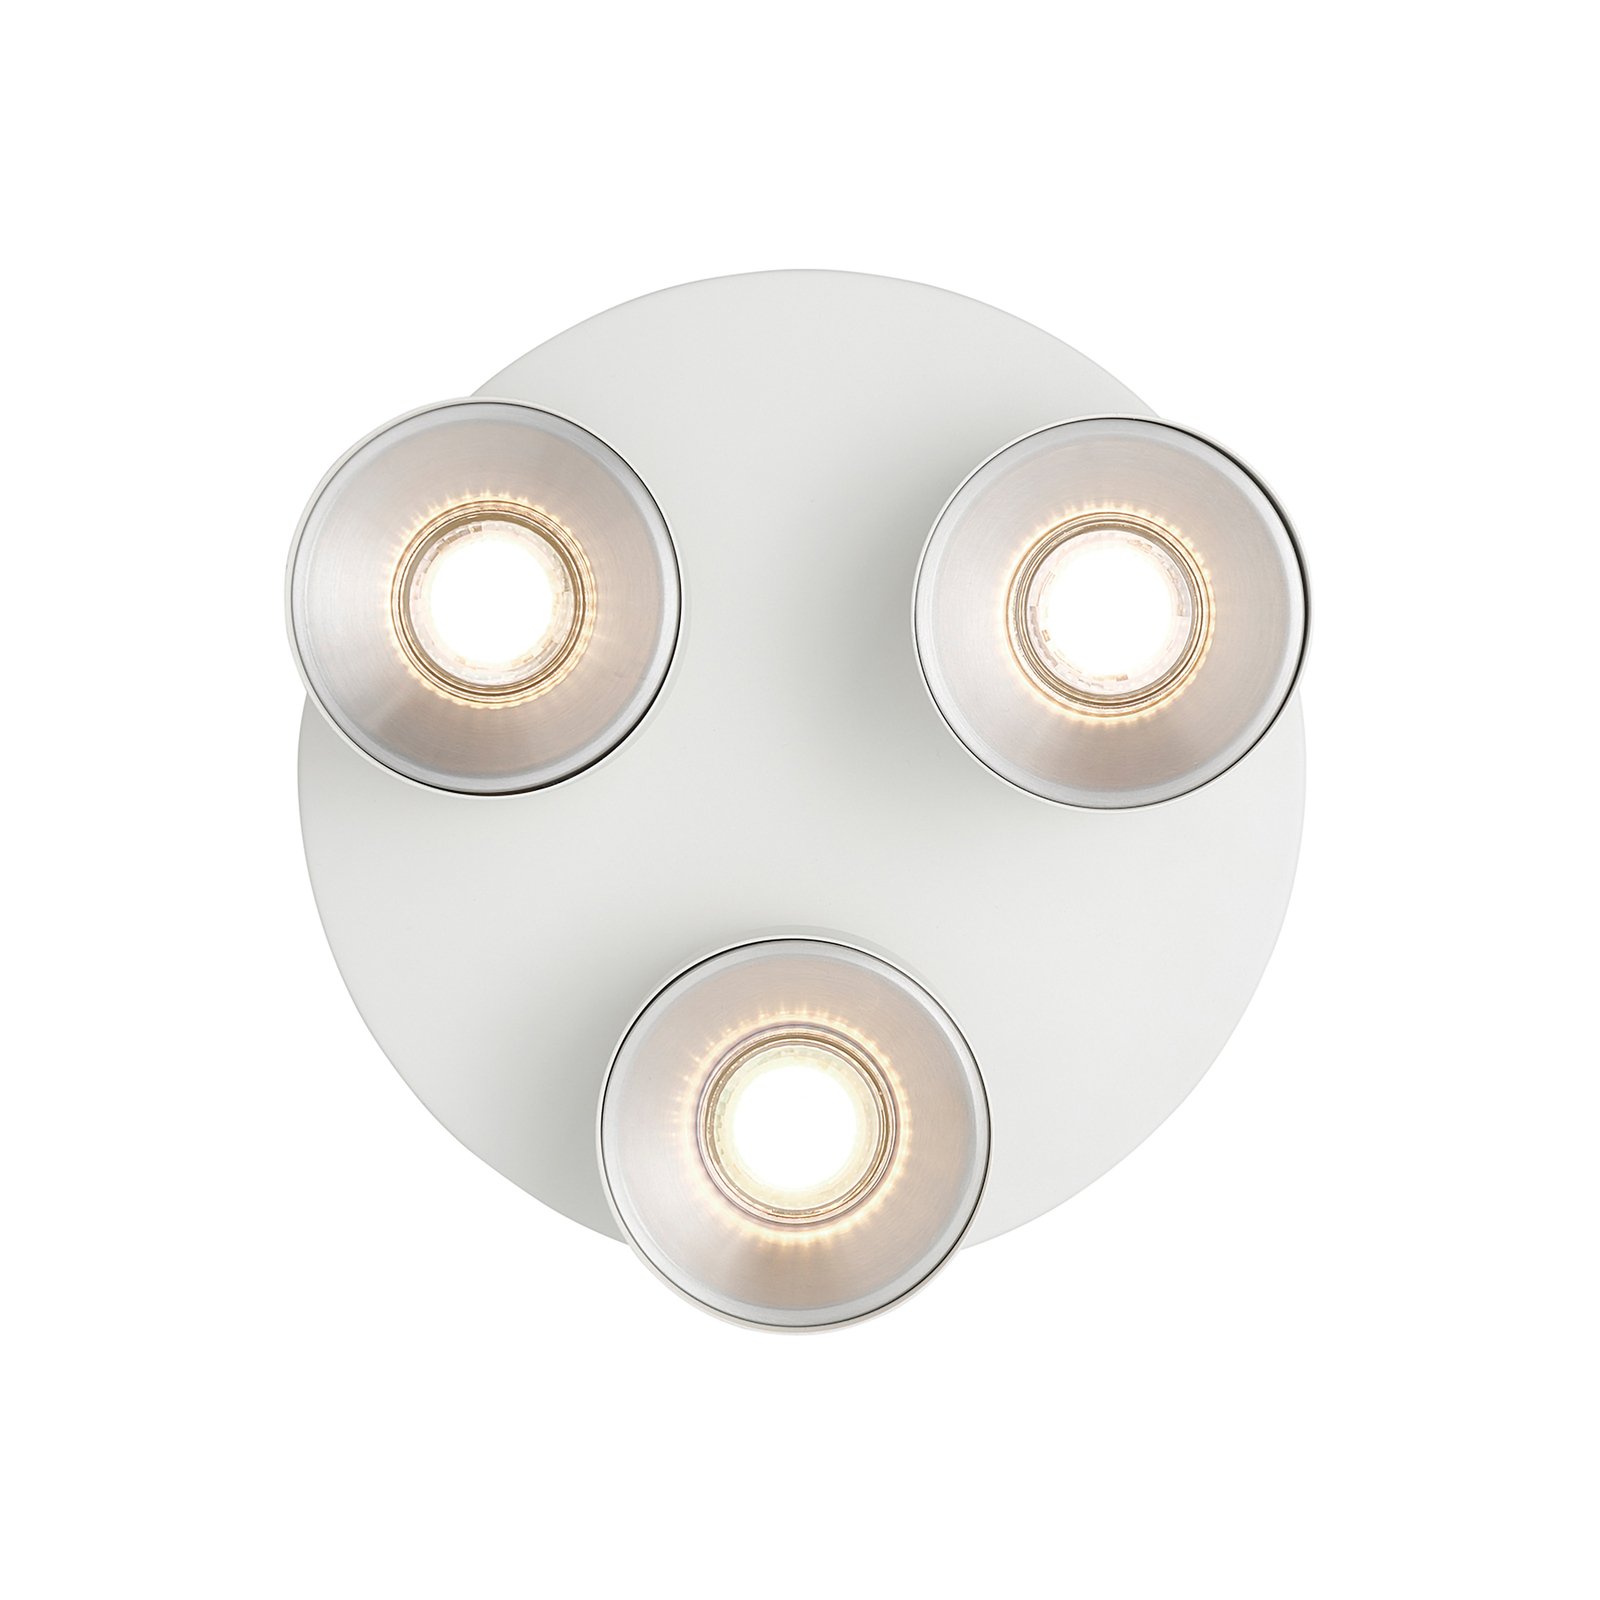 Pitcher downlight, GU10, 3-bulb, round, metal, white